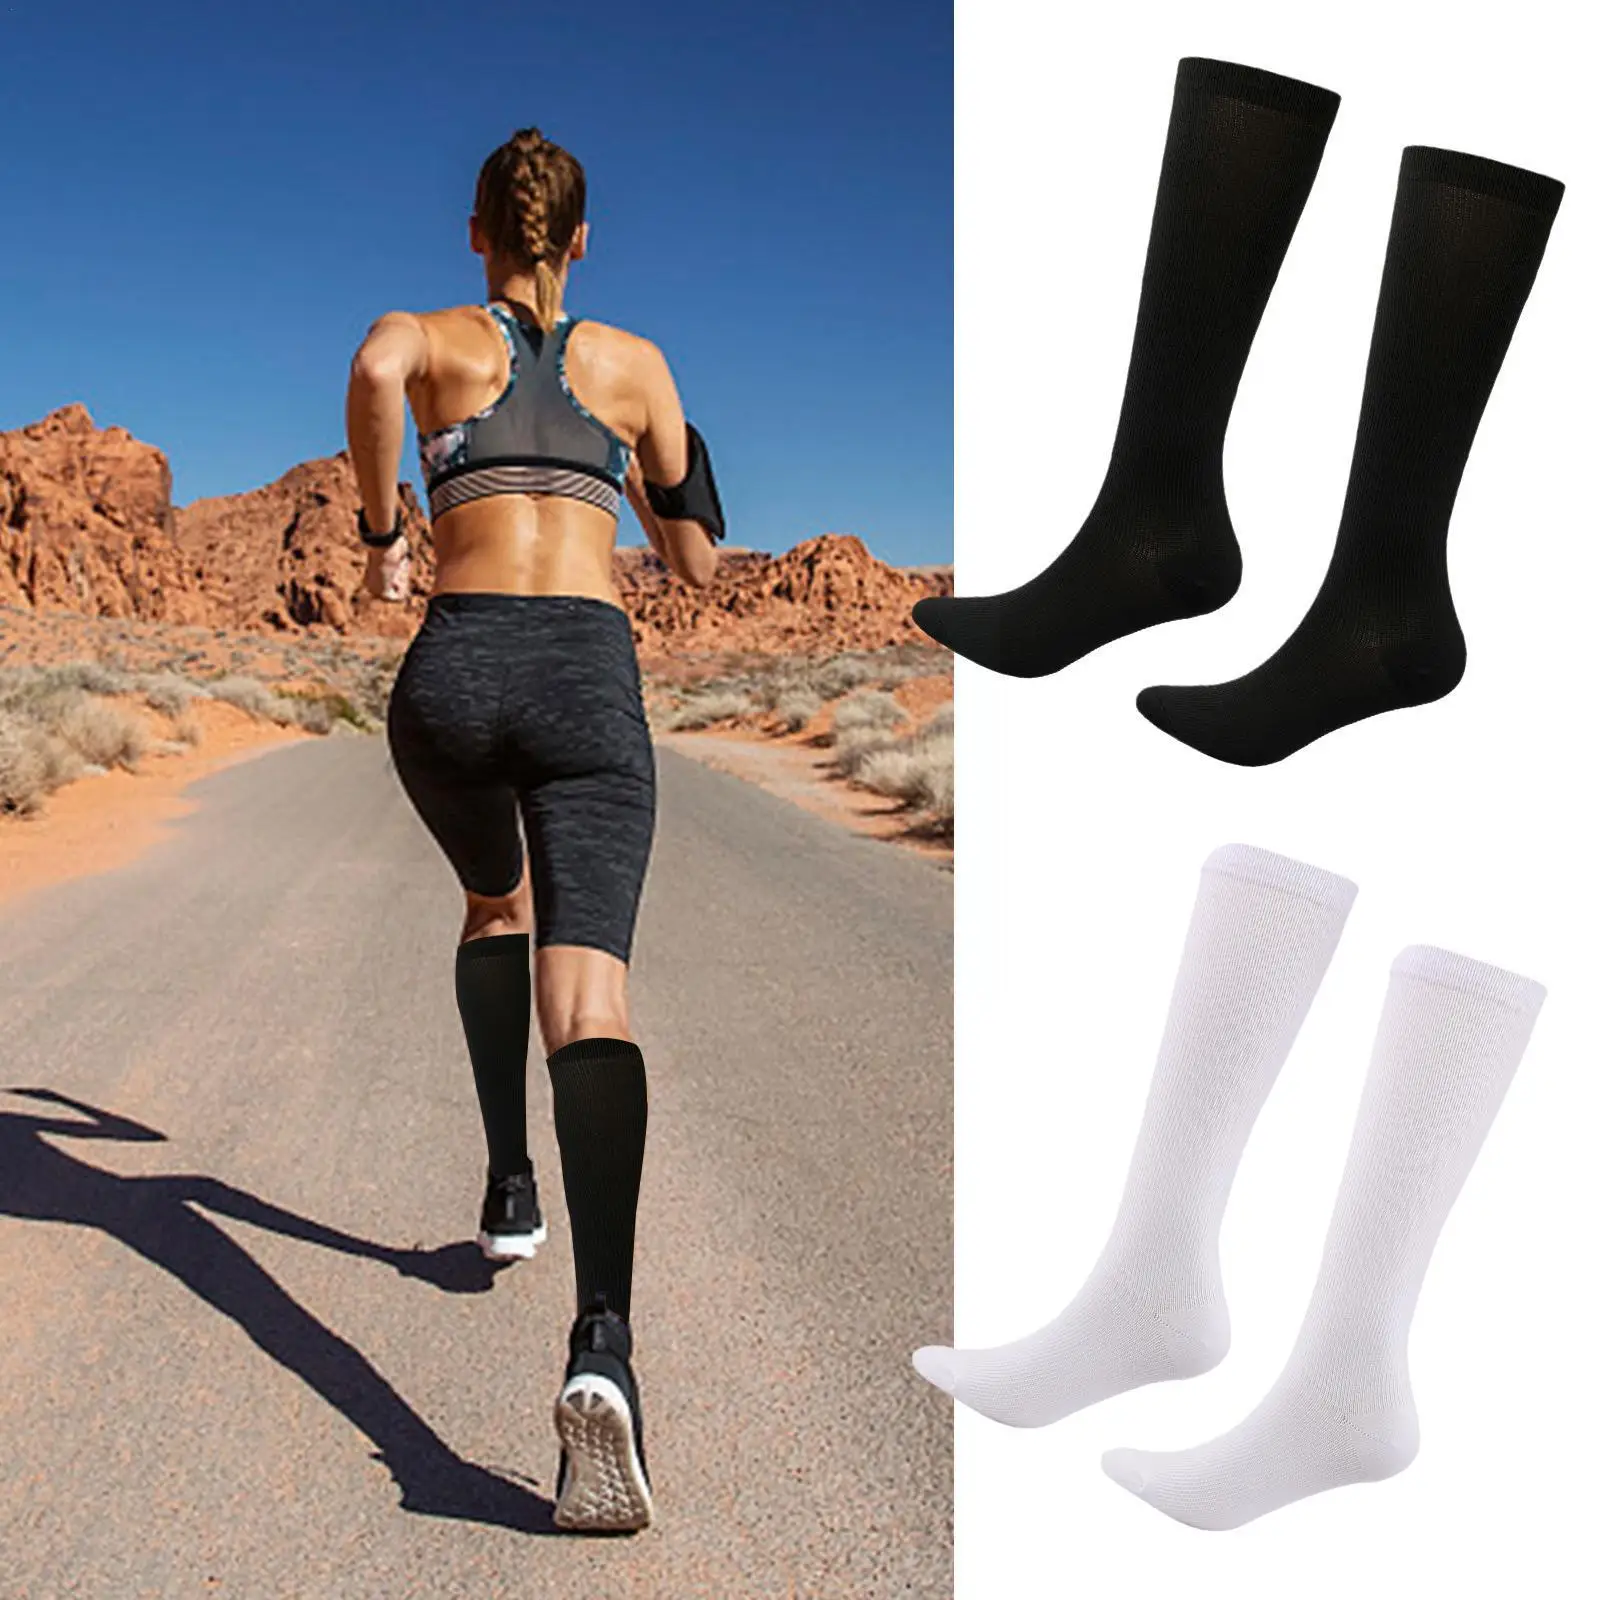 

New Arrival Stockings Compression Golf Sport Socks Medical Nursing Stockings Prevent Varicose Veins Socks Fit For running S H5G8